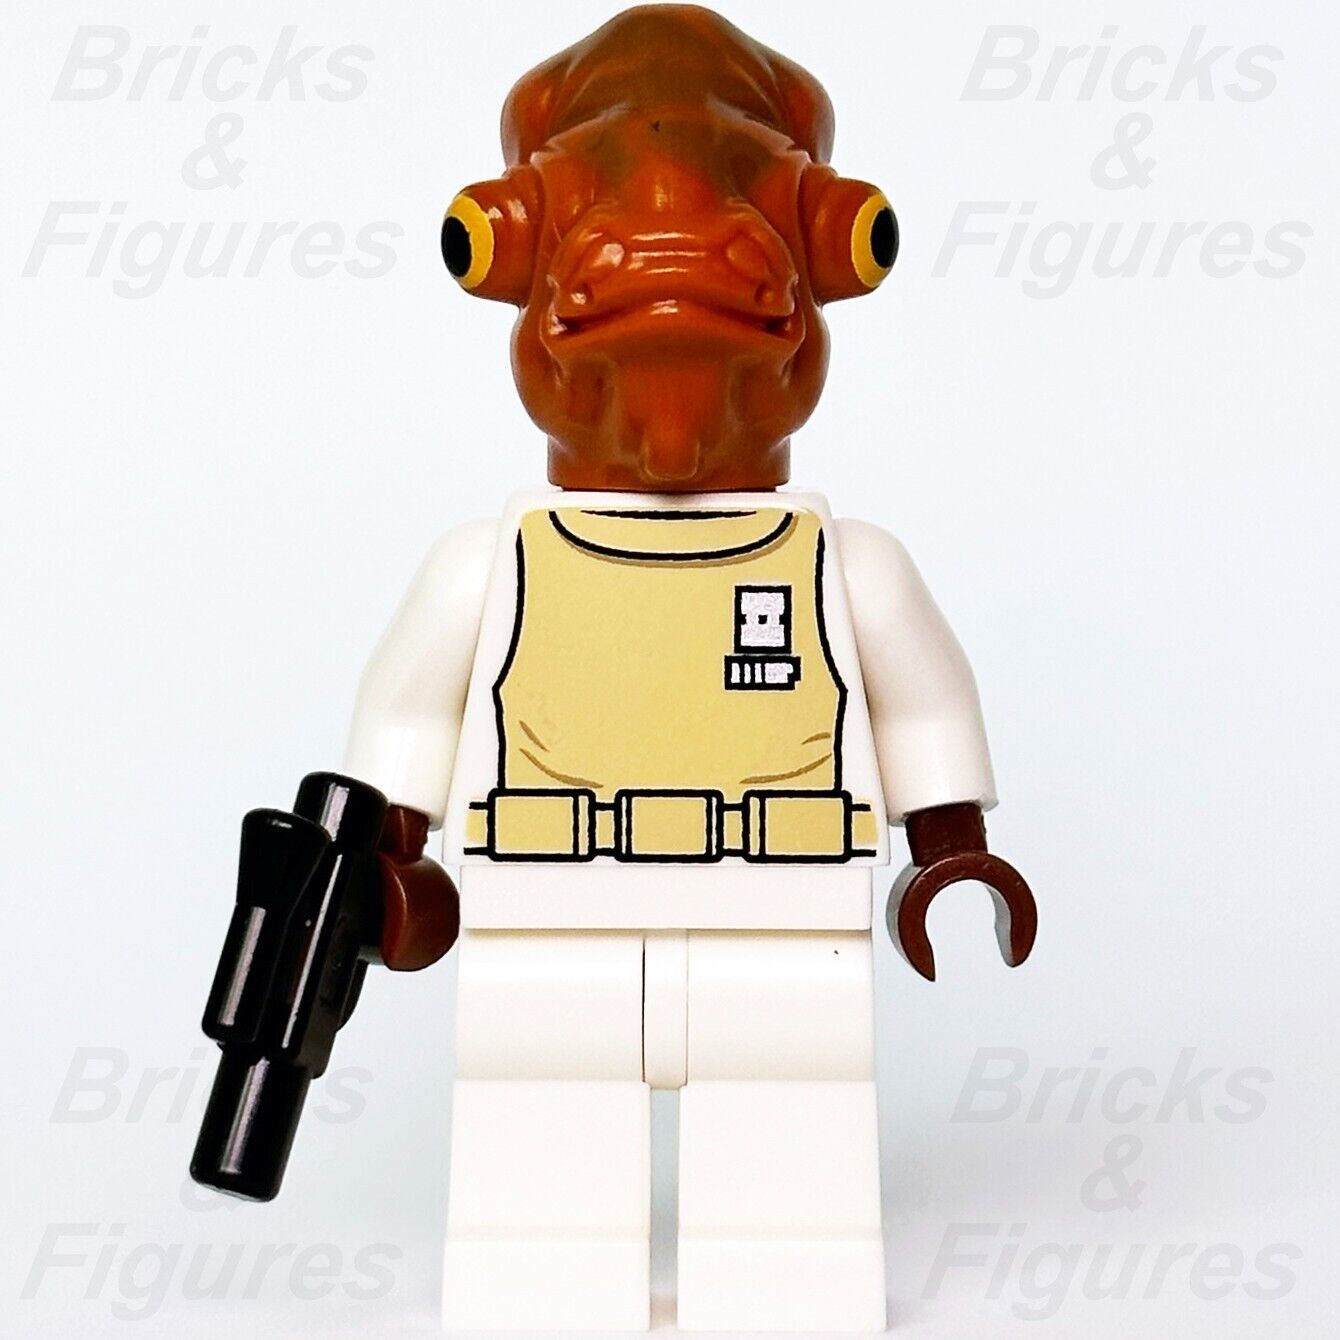 LEGO Star Wars Admiral Ackbar Minifigure Mon Calamari 75003 7754 sw0247 Minifig 2